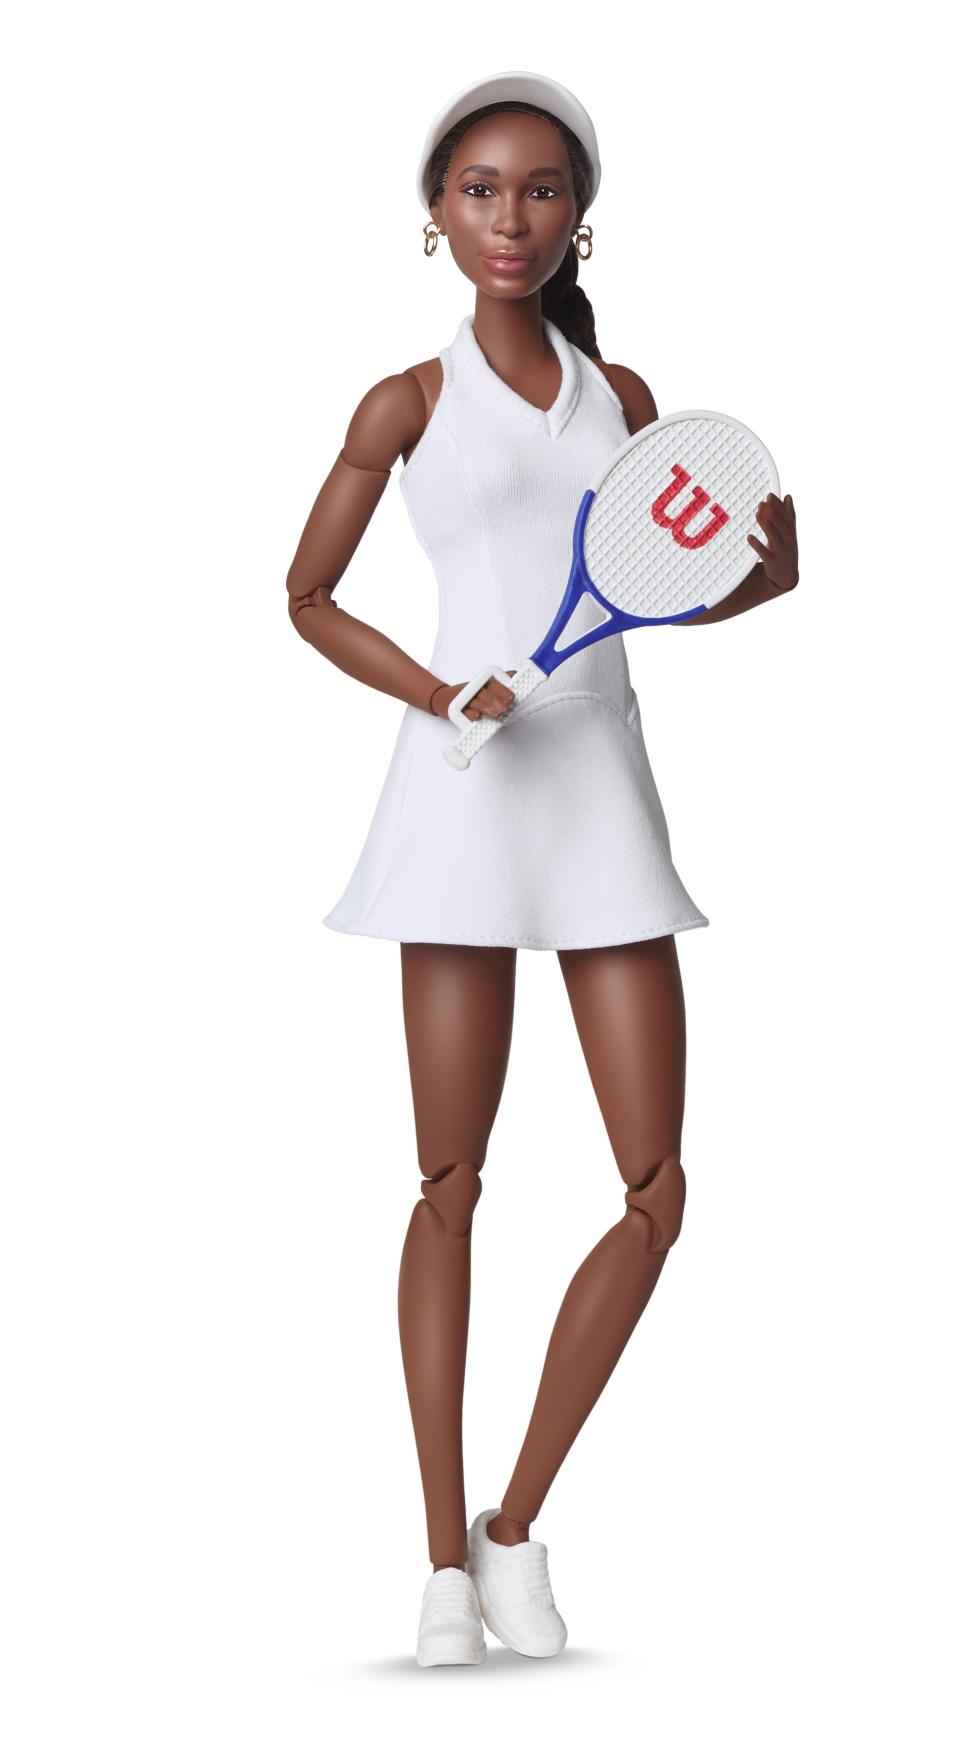 Venus Williams' one-of-a-kind Barbie doll, tennis, Wimbledon, athlete, Mattel